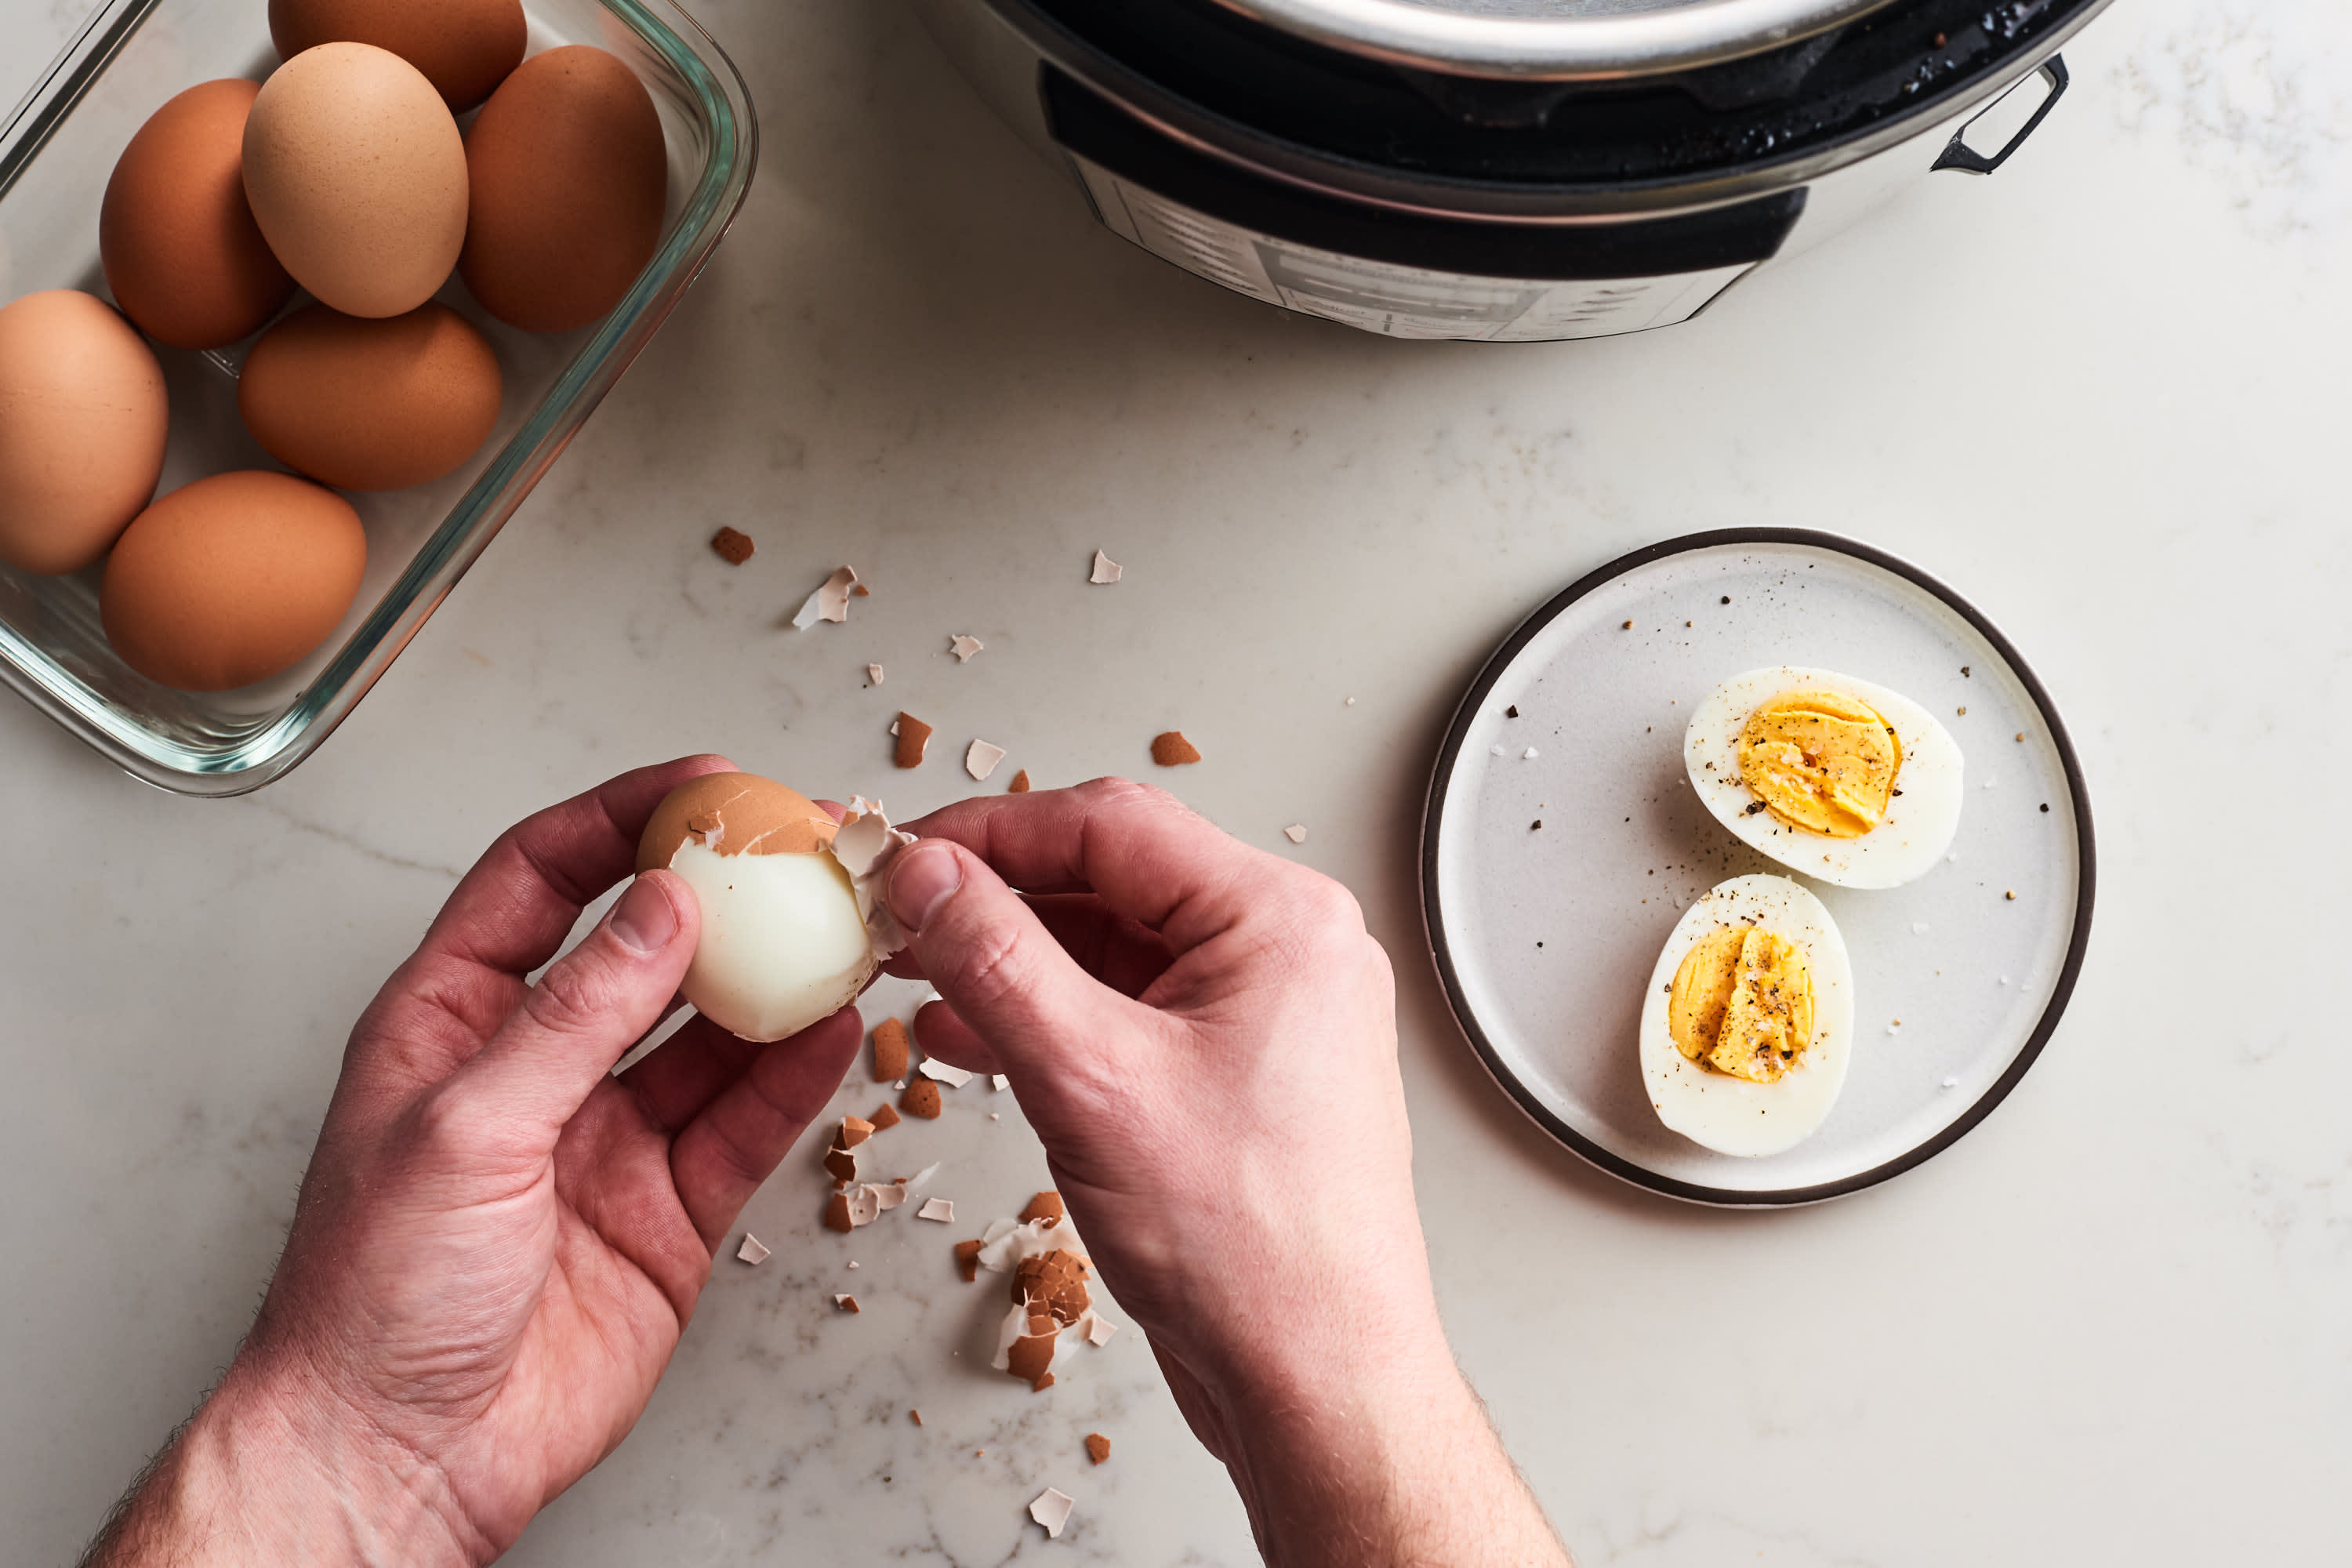 https://cdn.apartmenttherapy.info/image/upload/v1579293955/k/Photo/Recipes/2020-01-Hot-To-Instant-Pot-Hard-Boiled-Eggs/How-to-Make-the-Best-Instant-Pot-Hard-Boiled-Eggs_037.jpg